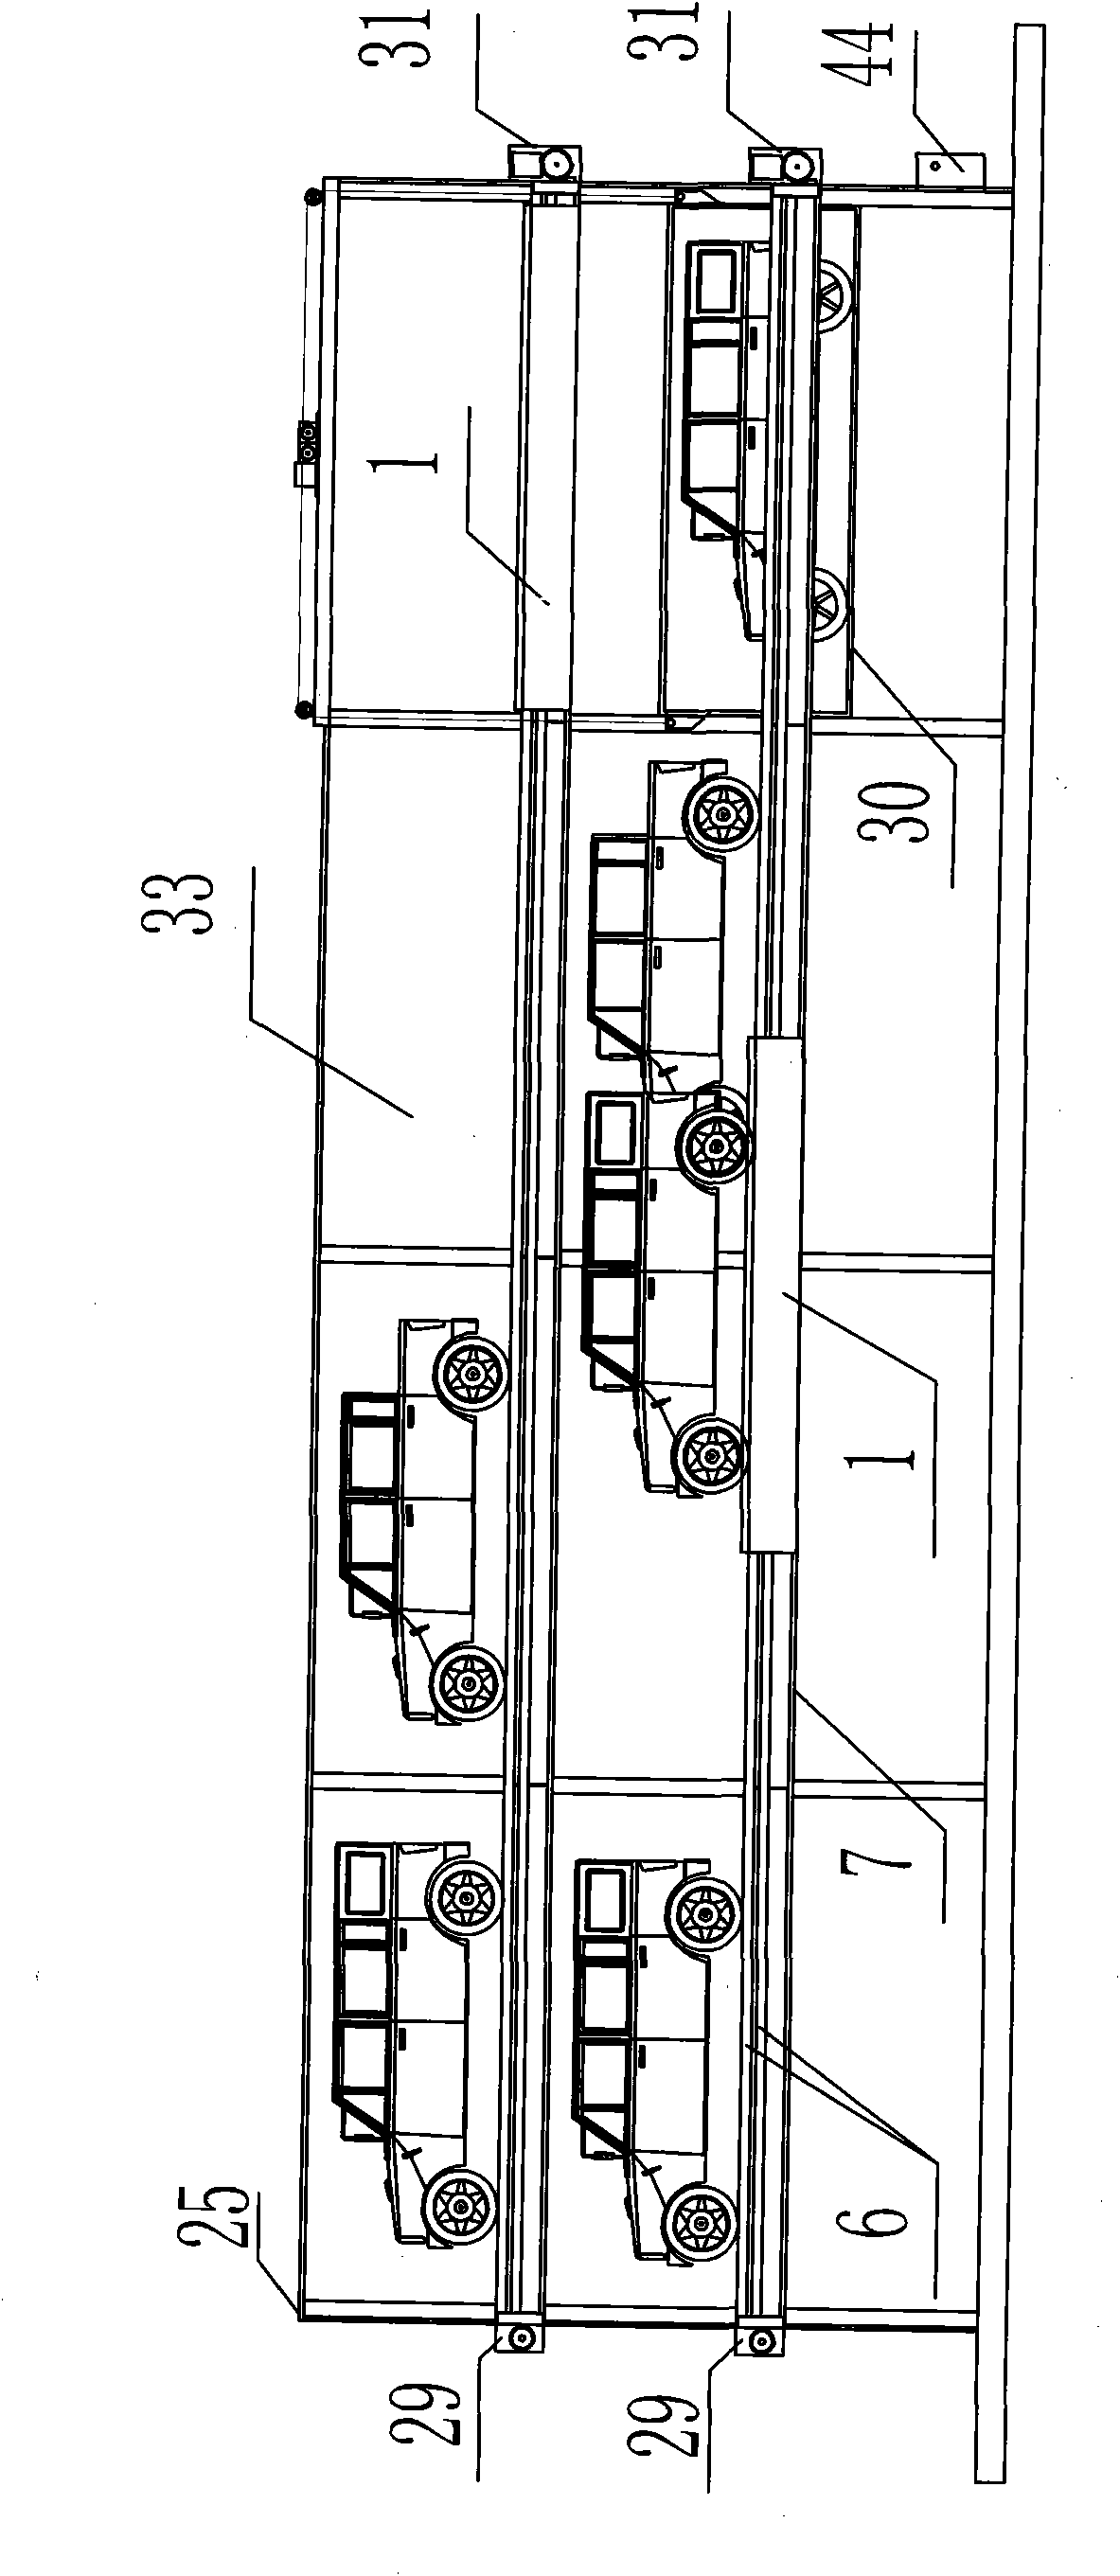 Border rail moving type multi-storied parking apparatus